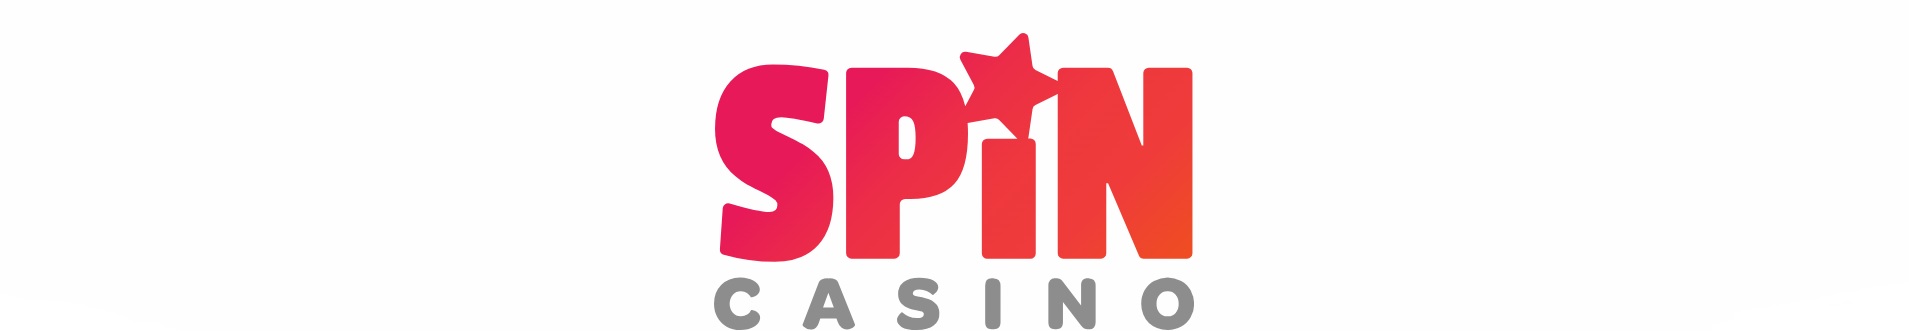 Spin Casino Recenzie